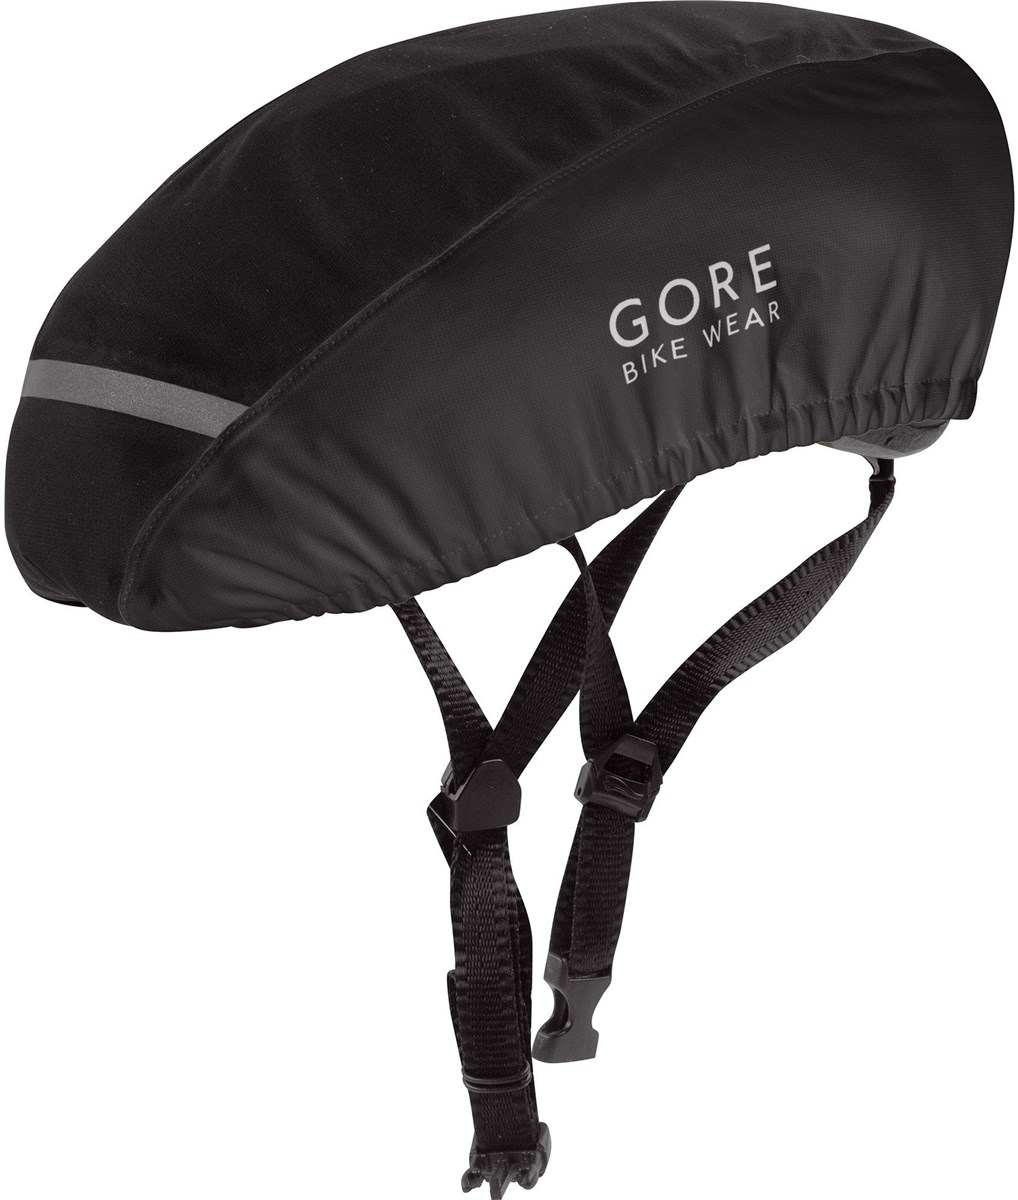 Gore Universal 2.0 Gore-Tex Helmet Cover AW17